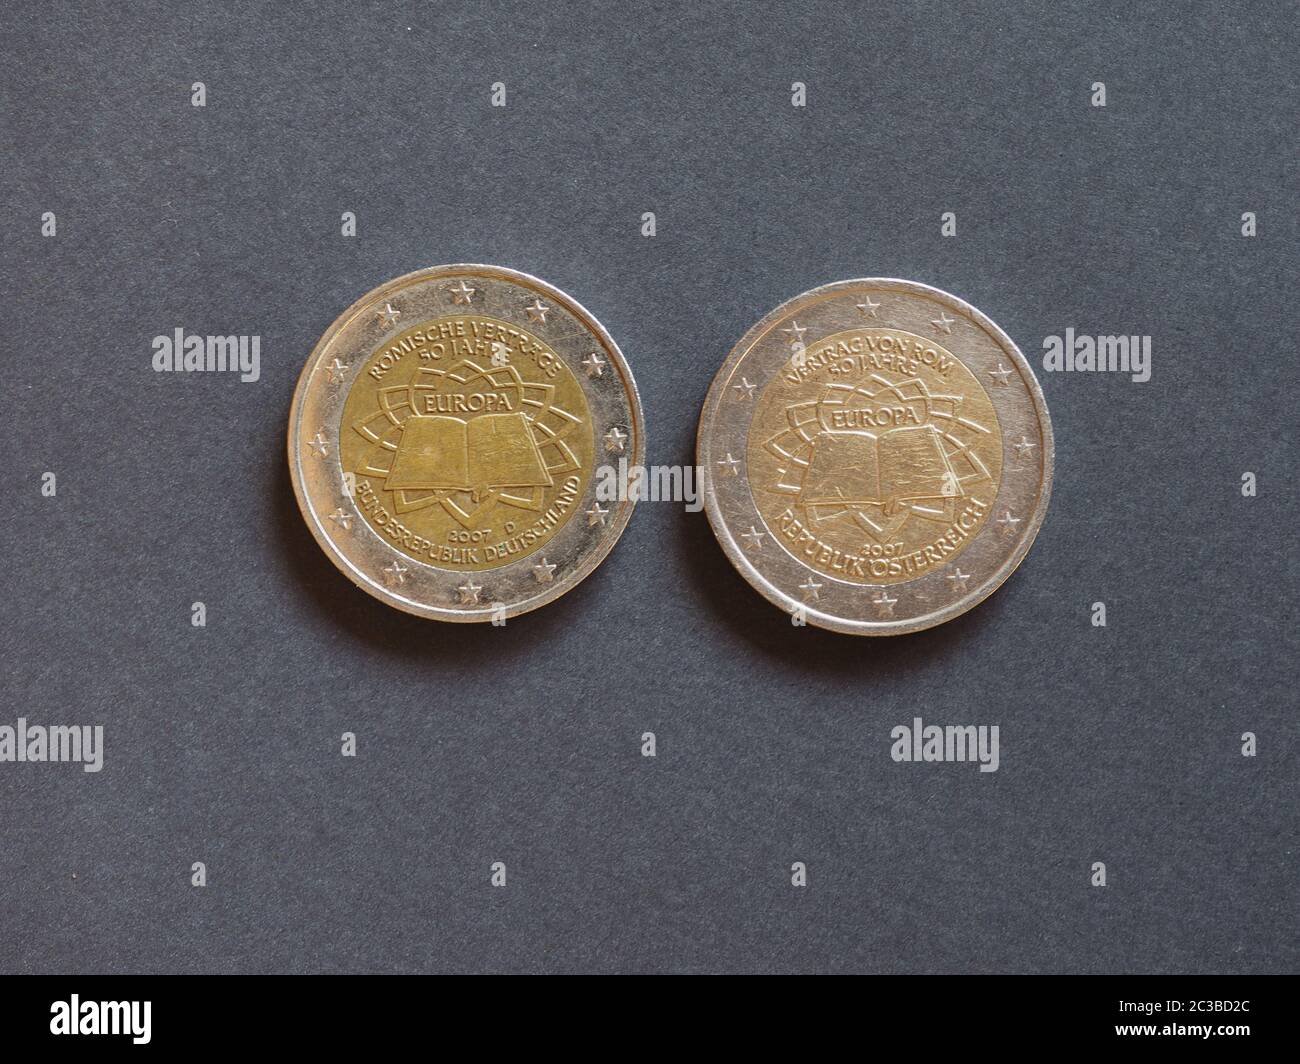 Roemische Vertraege aka Vertrag von Rom (translation: Roman Treaty) German and Austrian Euro coins Stock Photo